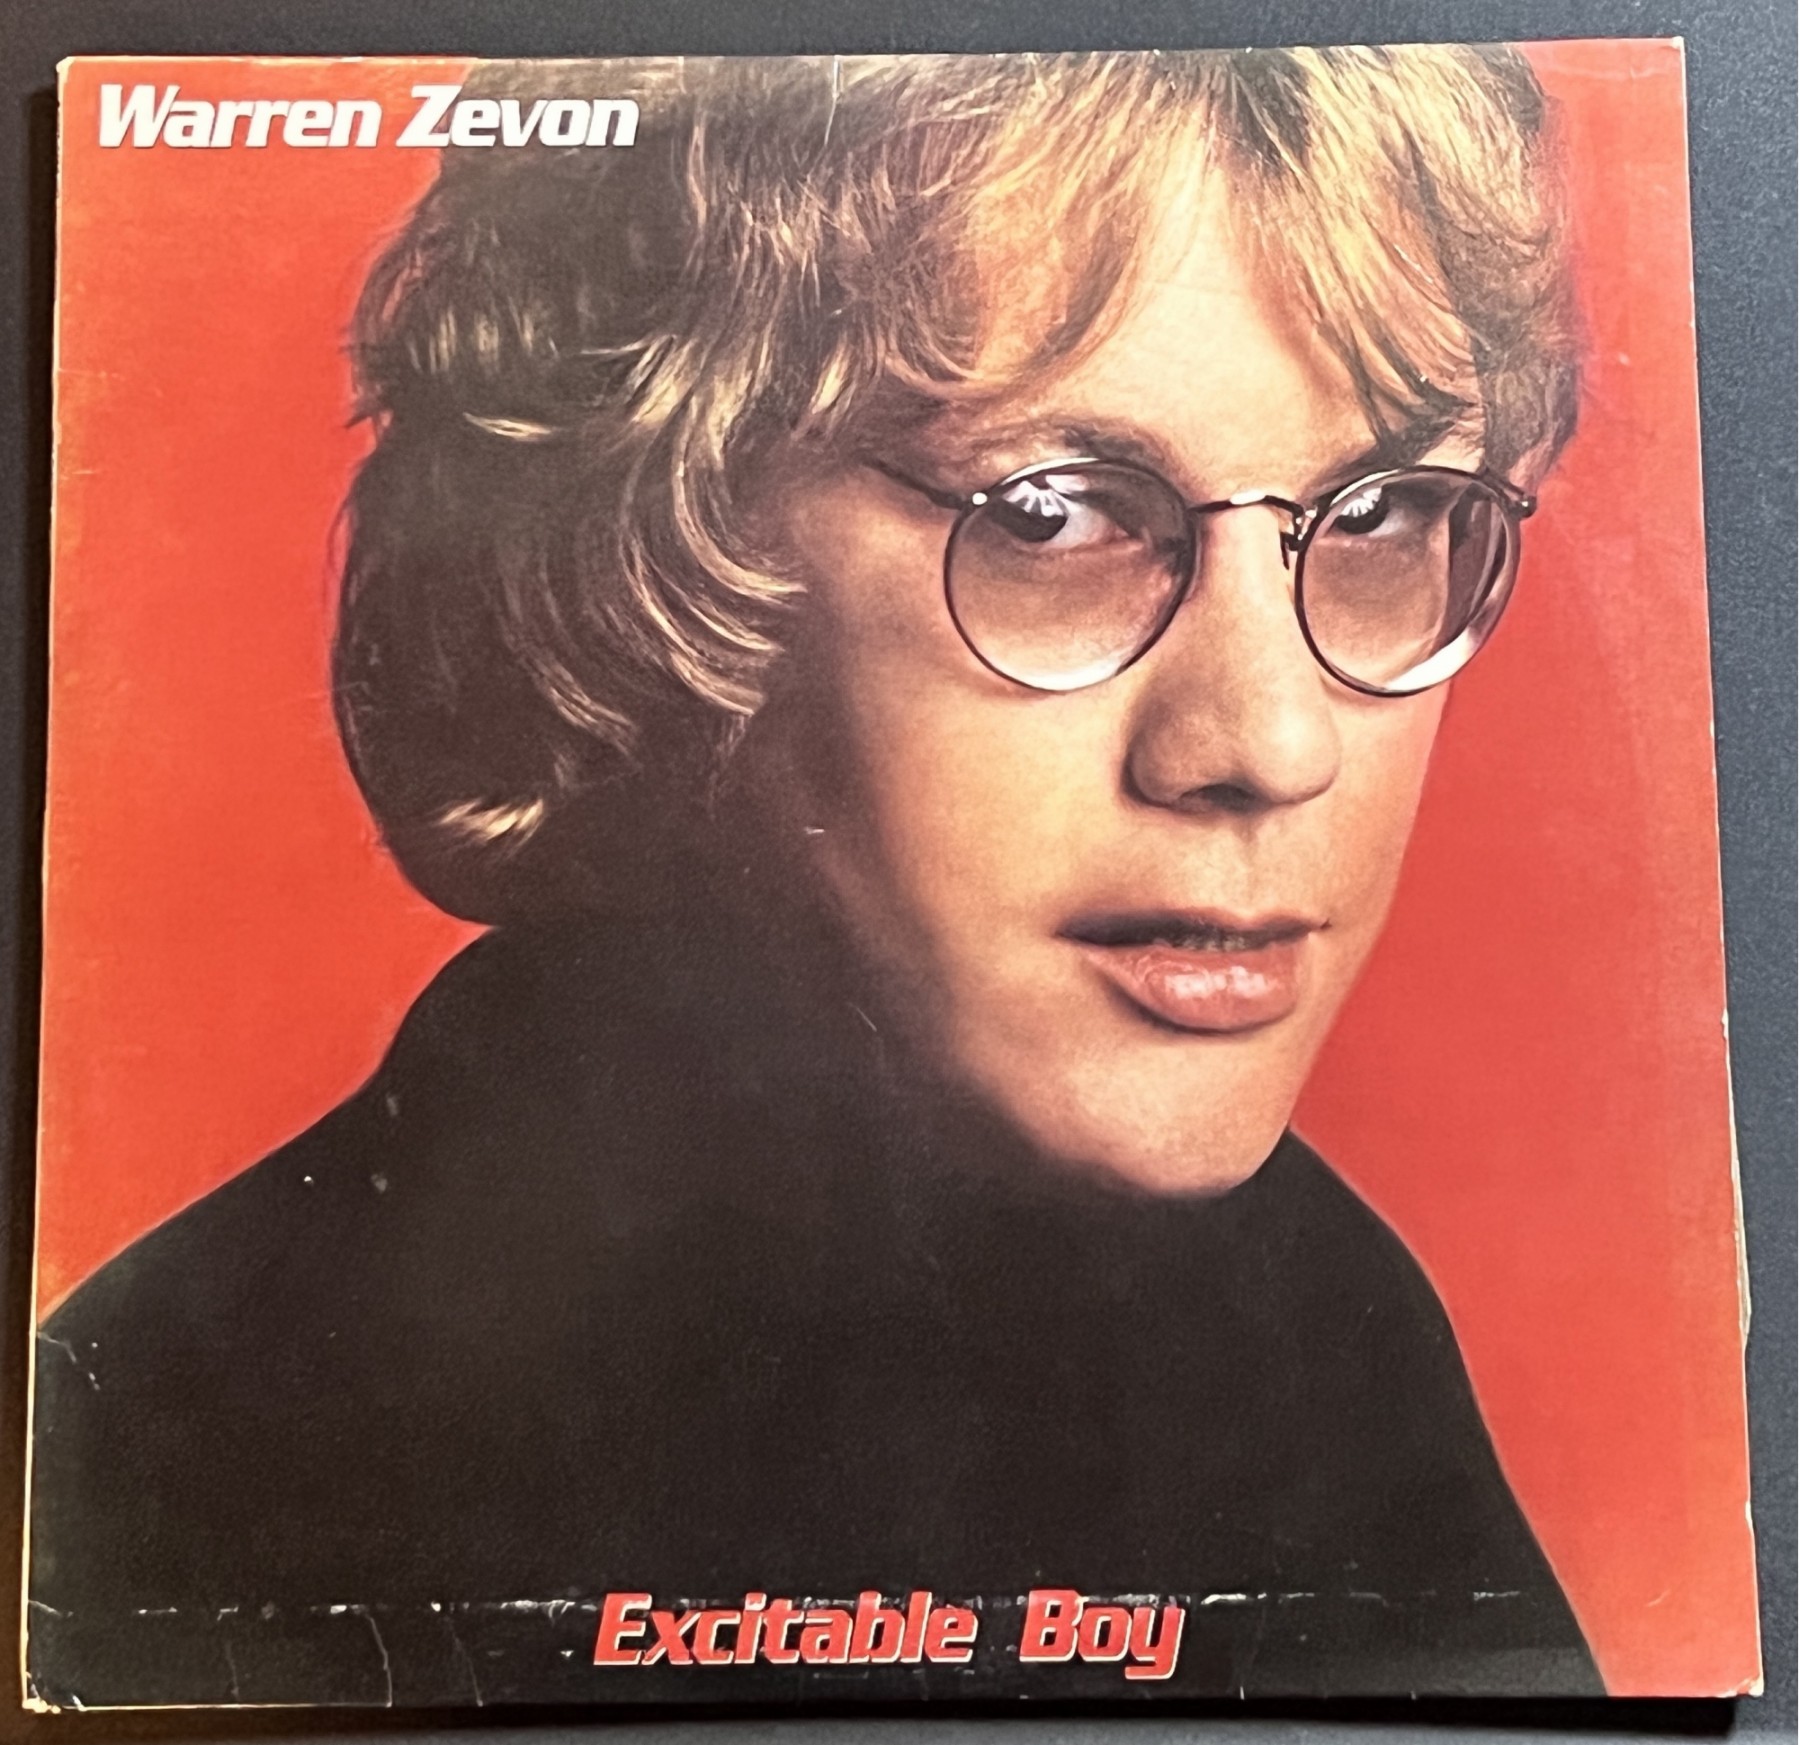 Vintage Vinyl ~ Warren Zevon Excitable Boy 1978 17585 5053